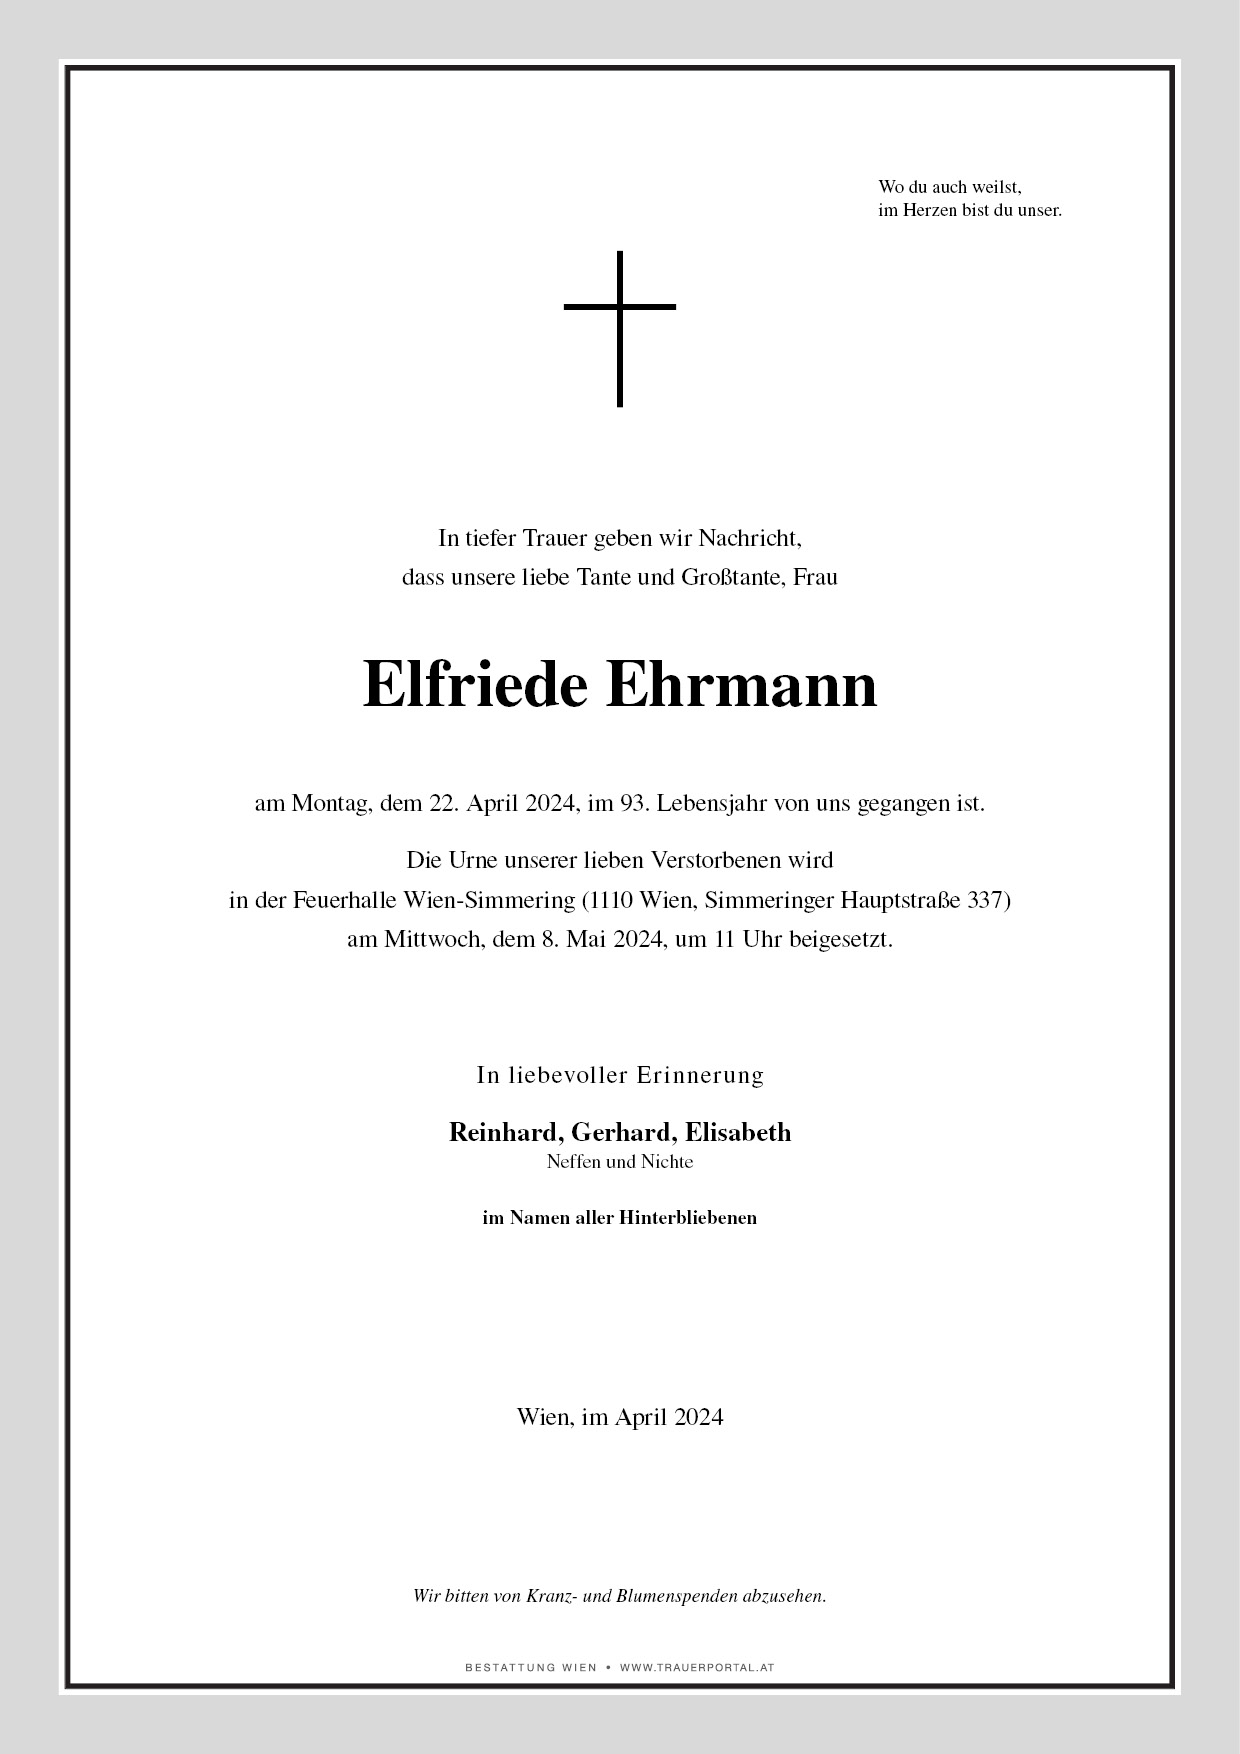 Elfriede Ehrmann